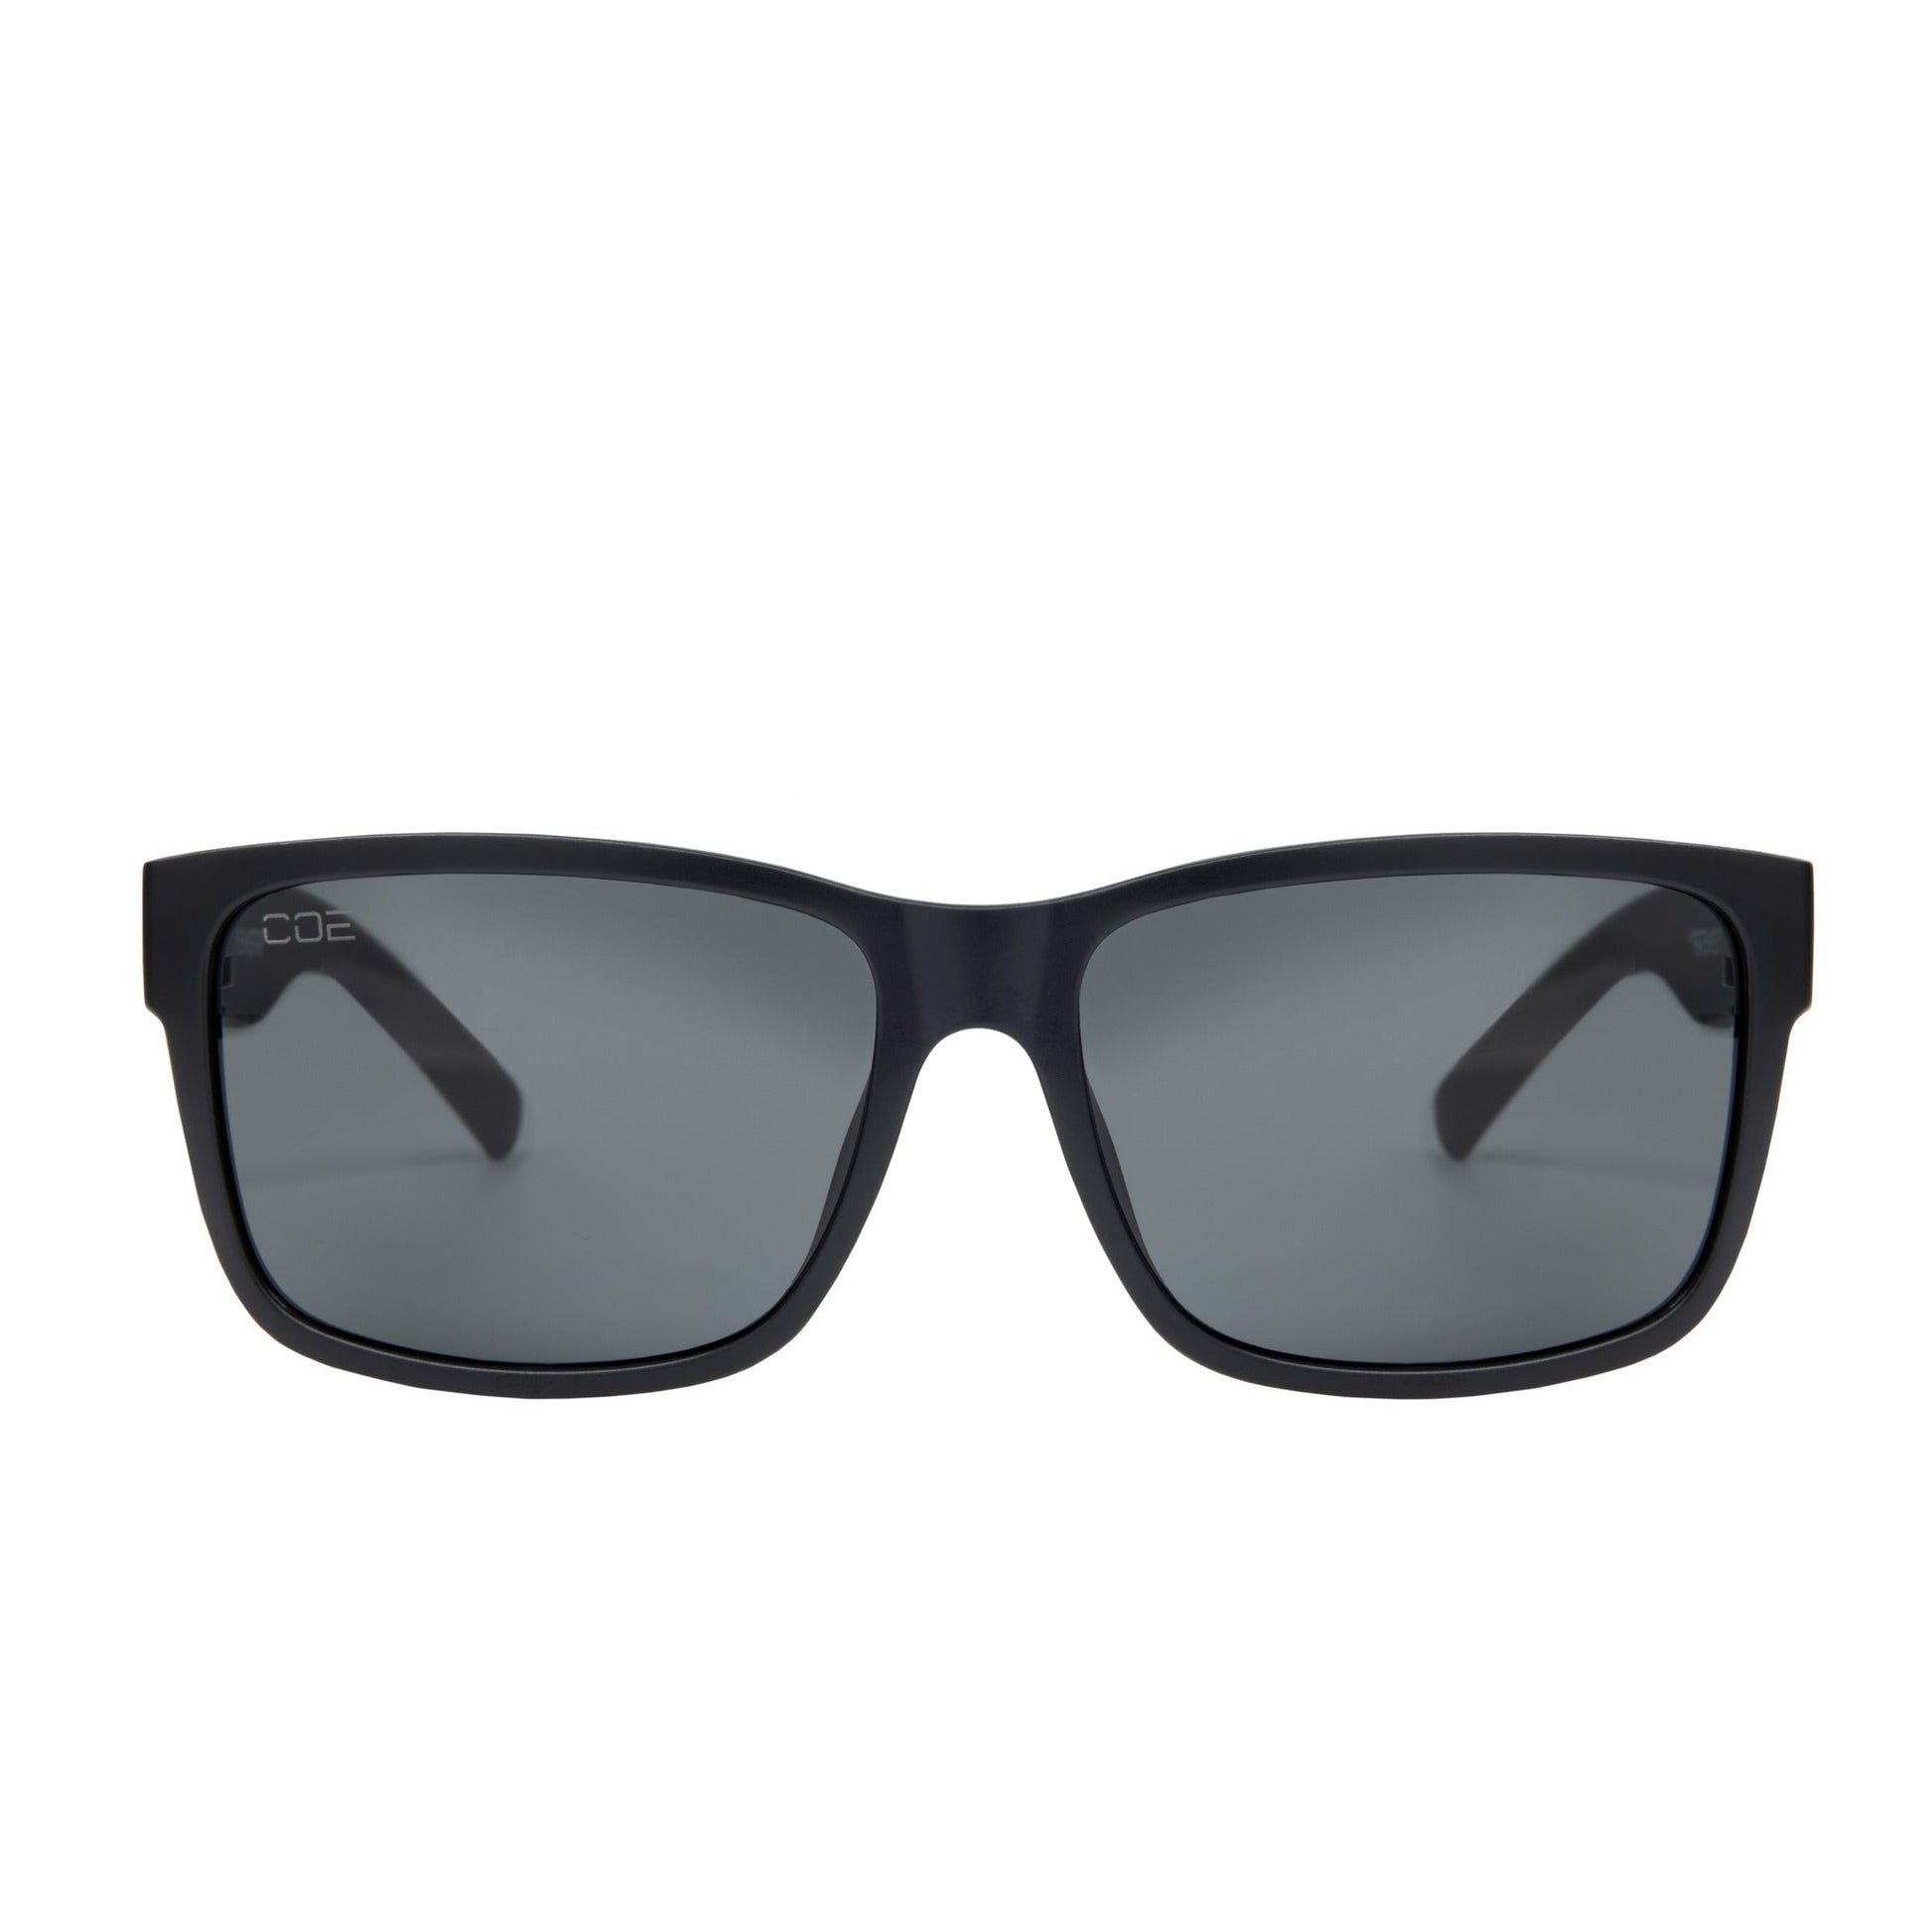 Oiler Z87 Matte Black Rx Lenses - Coeyewear